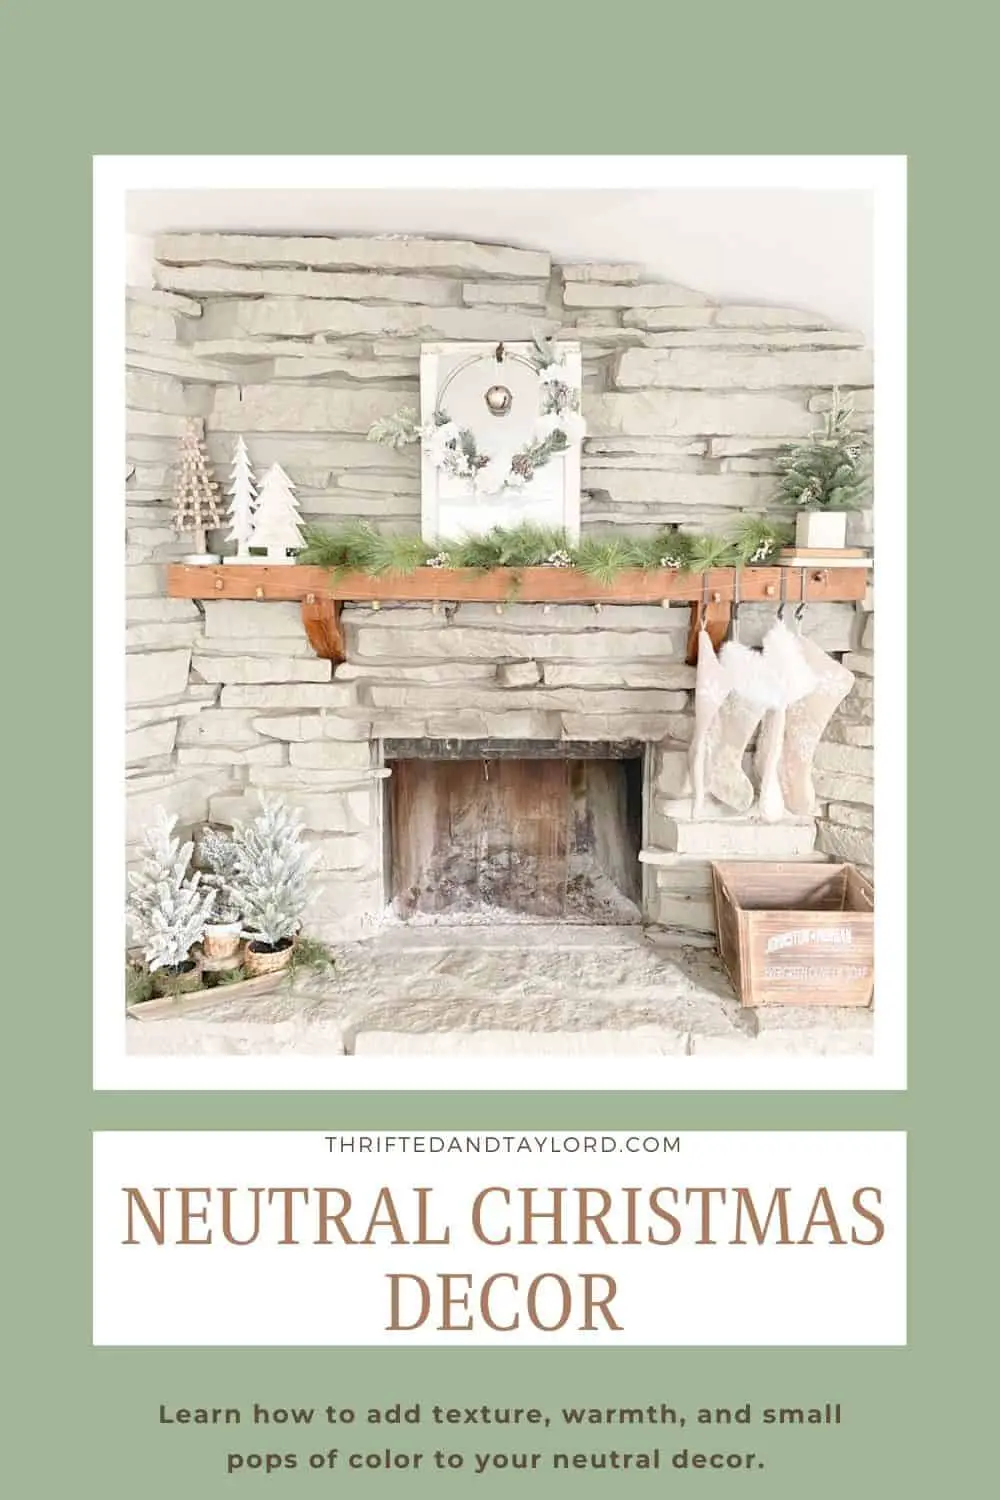 Neutral Christmas Decorations That Aren’t Lacking Color